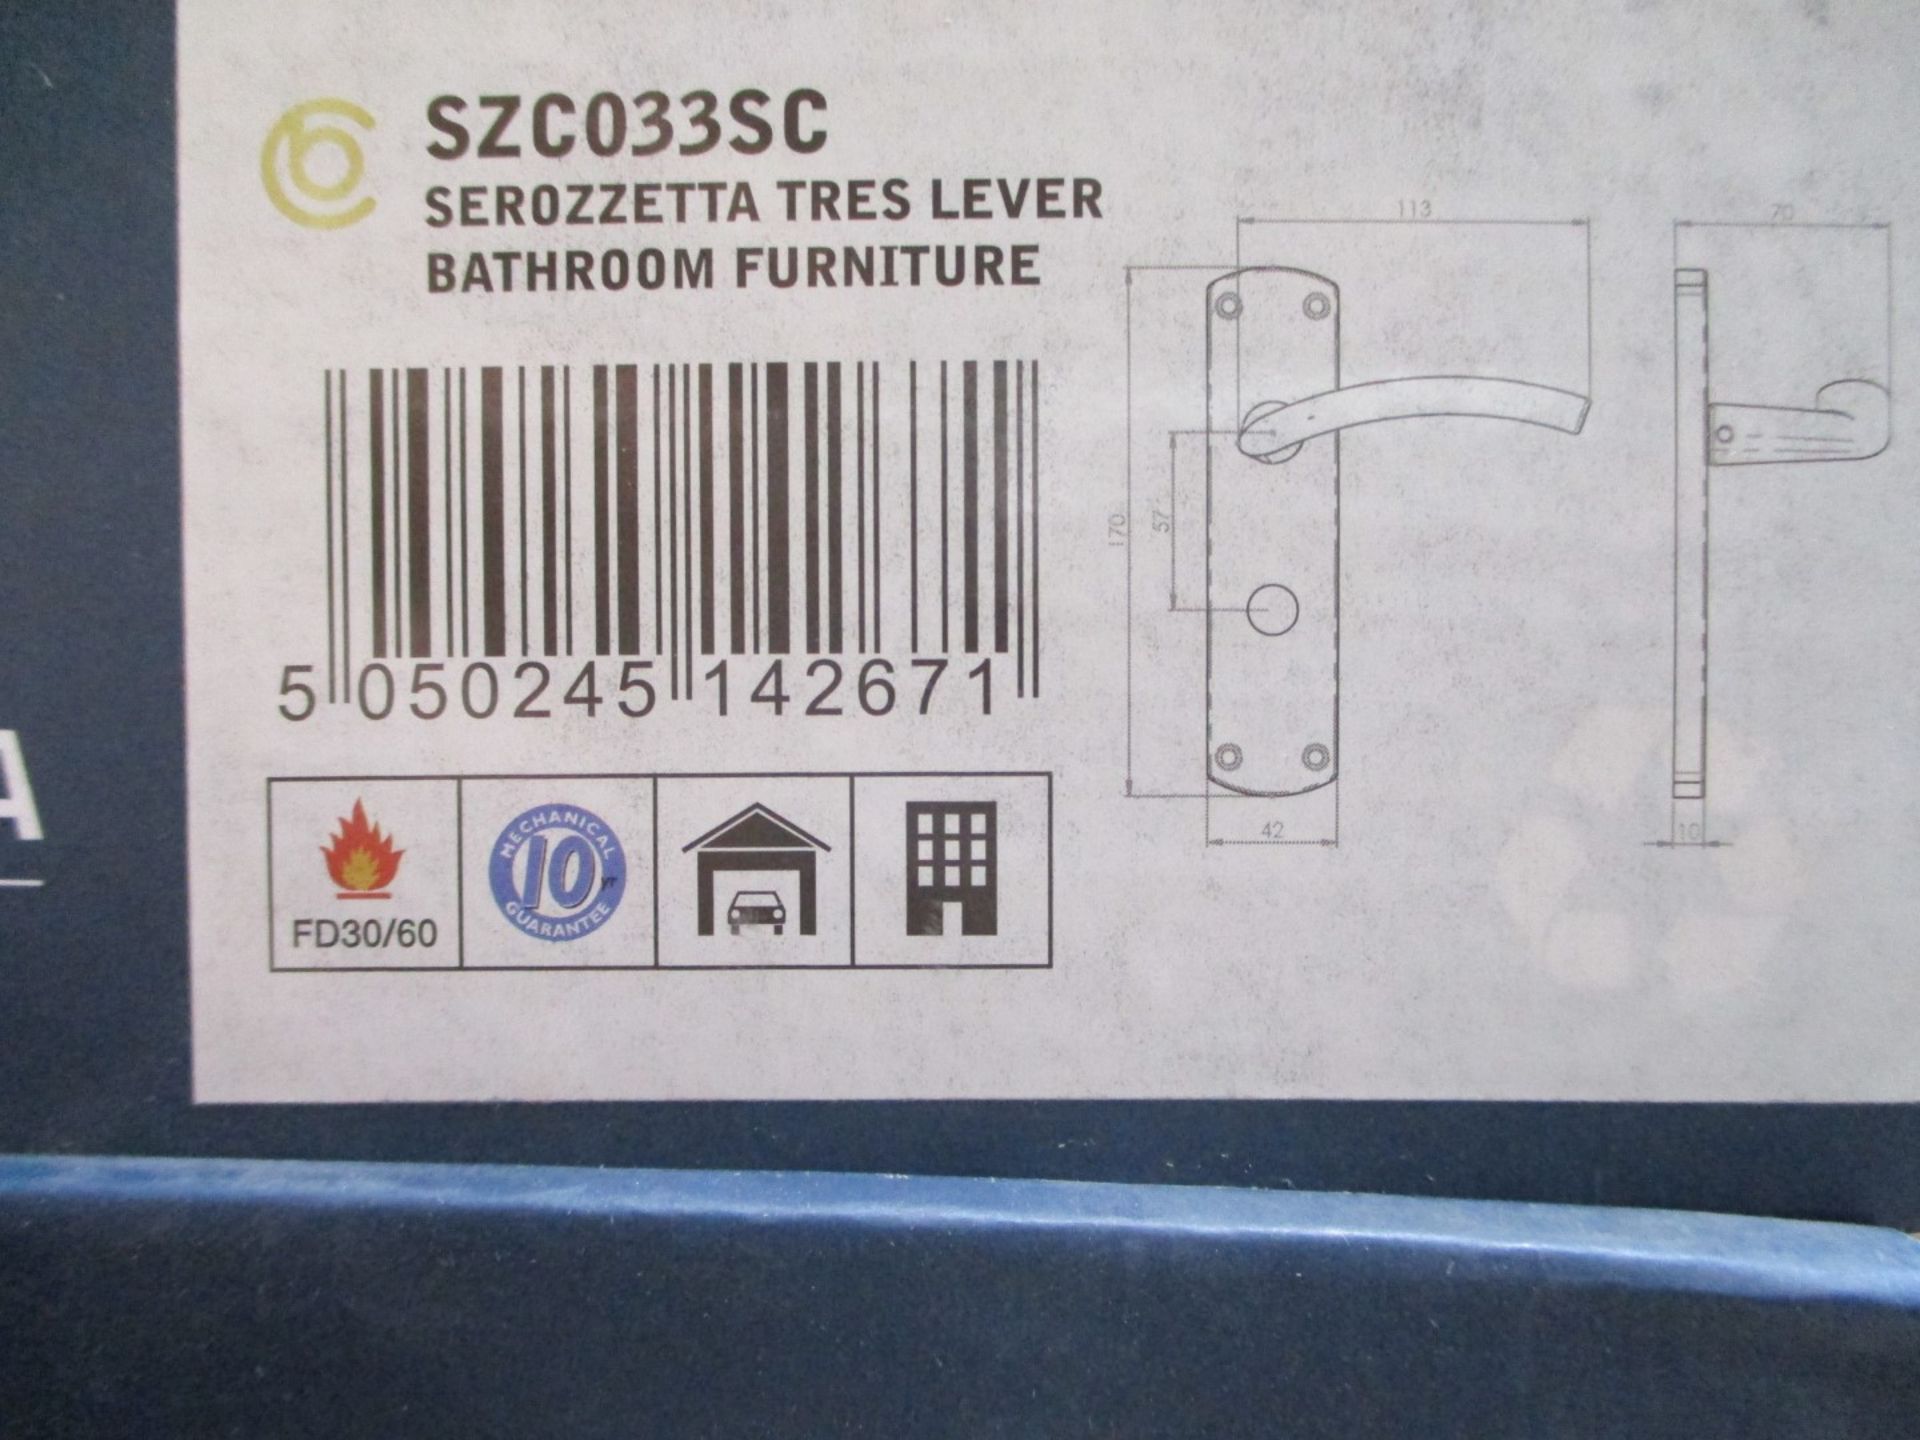 2 x Pairs Serozzetta Tres Internal Bathroom Door Handle Levers on Backplates in Satin Chrome - Brand - Image 2 of 4